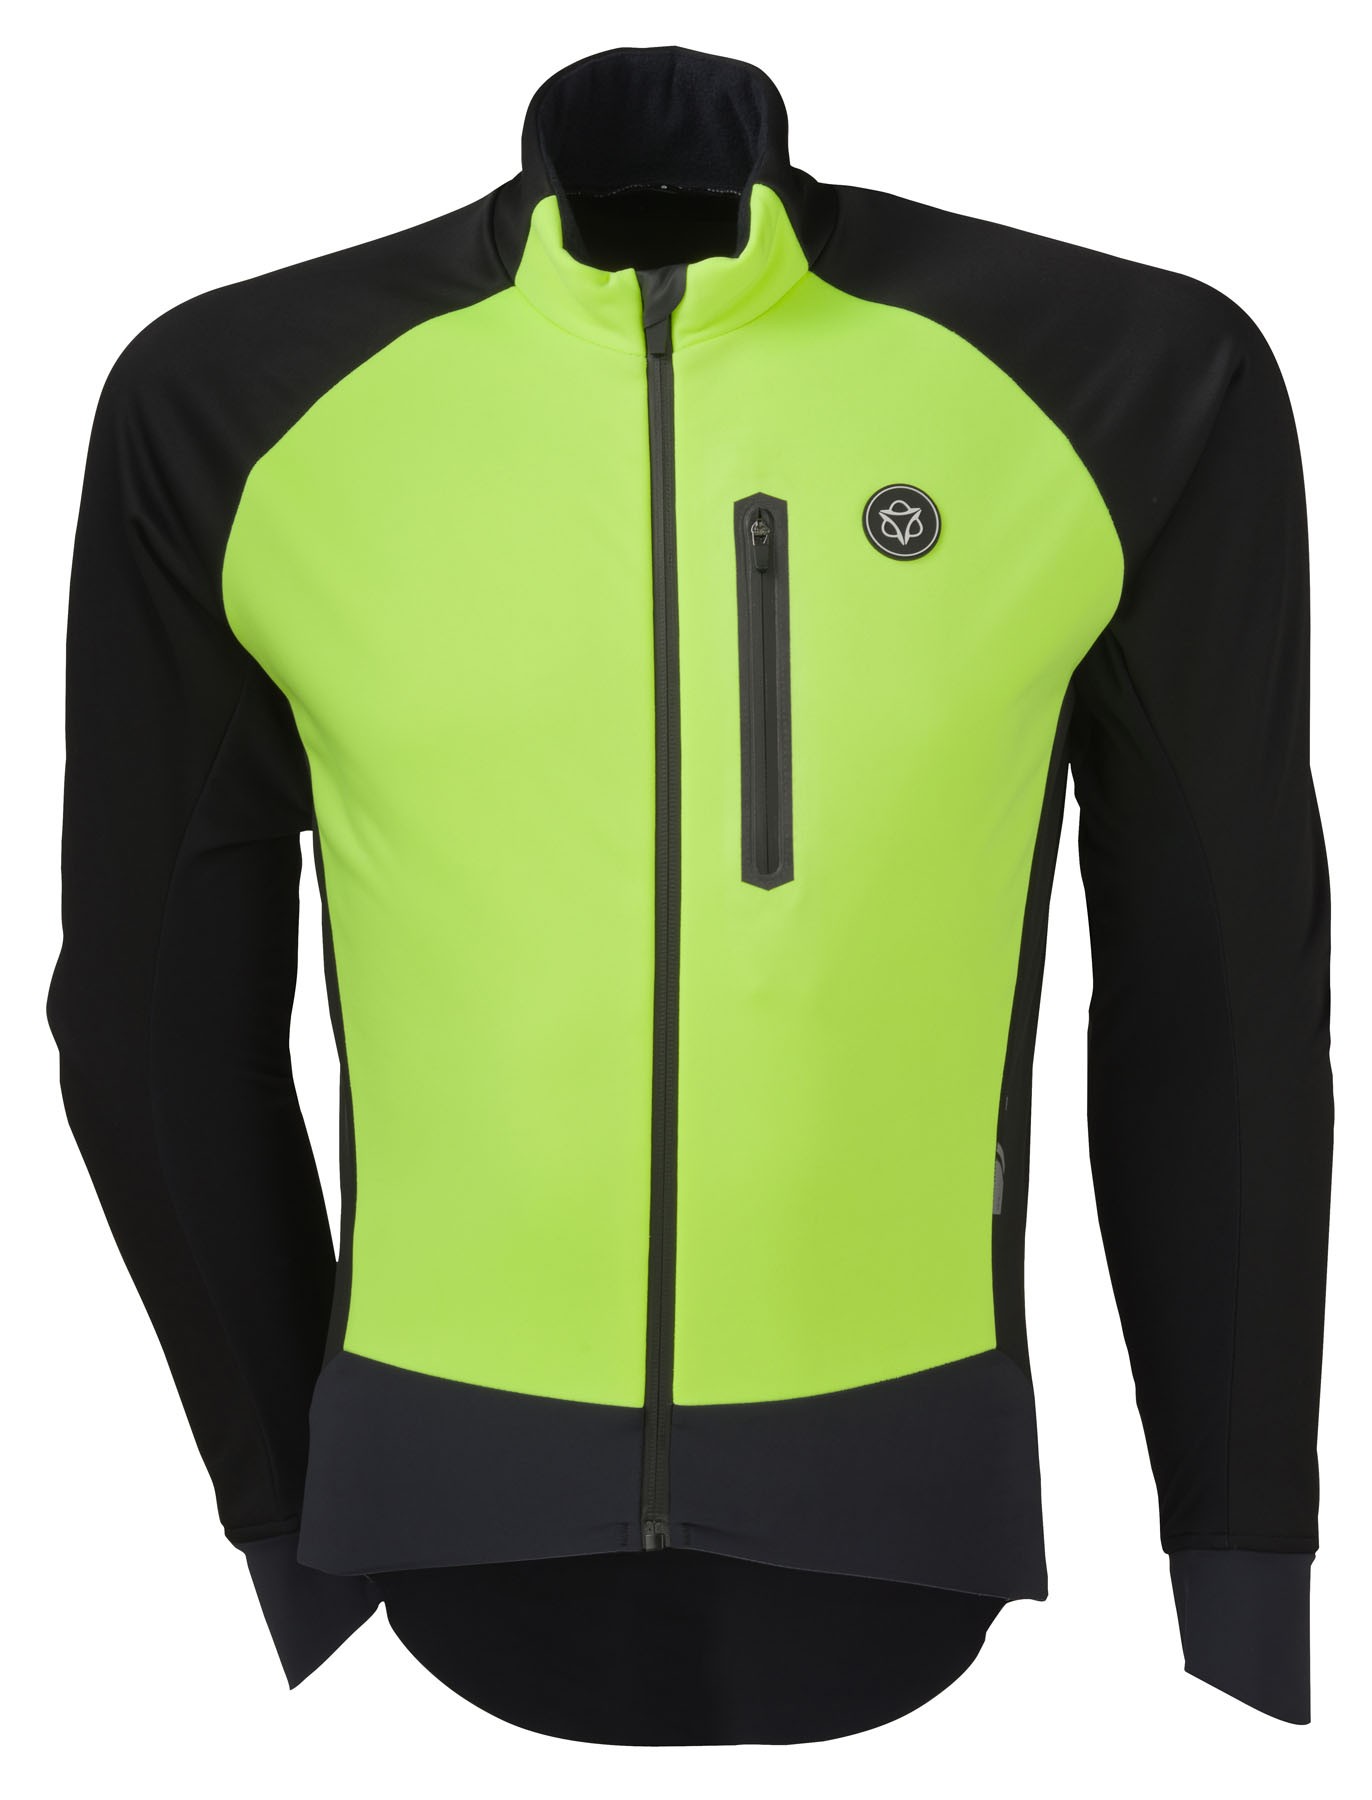 Agu pro winter softshell veste de cyclisme jaune fluorescent